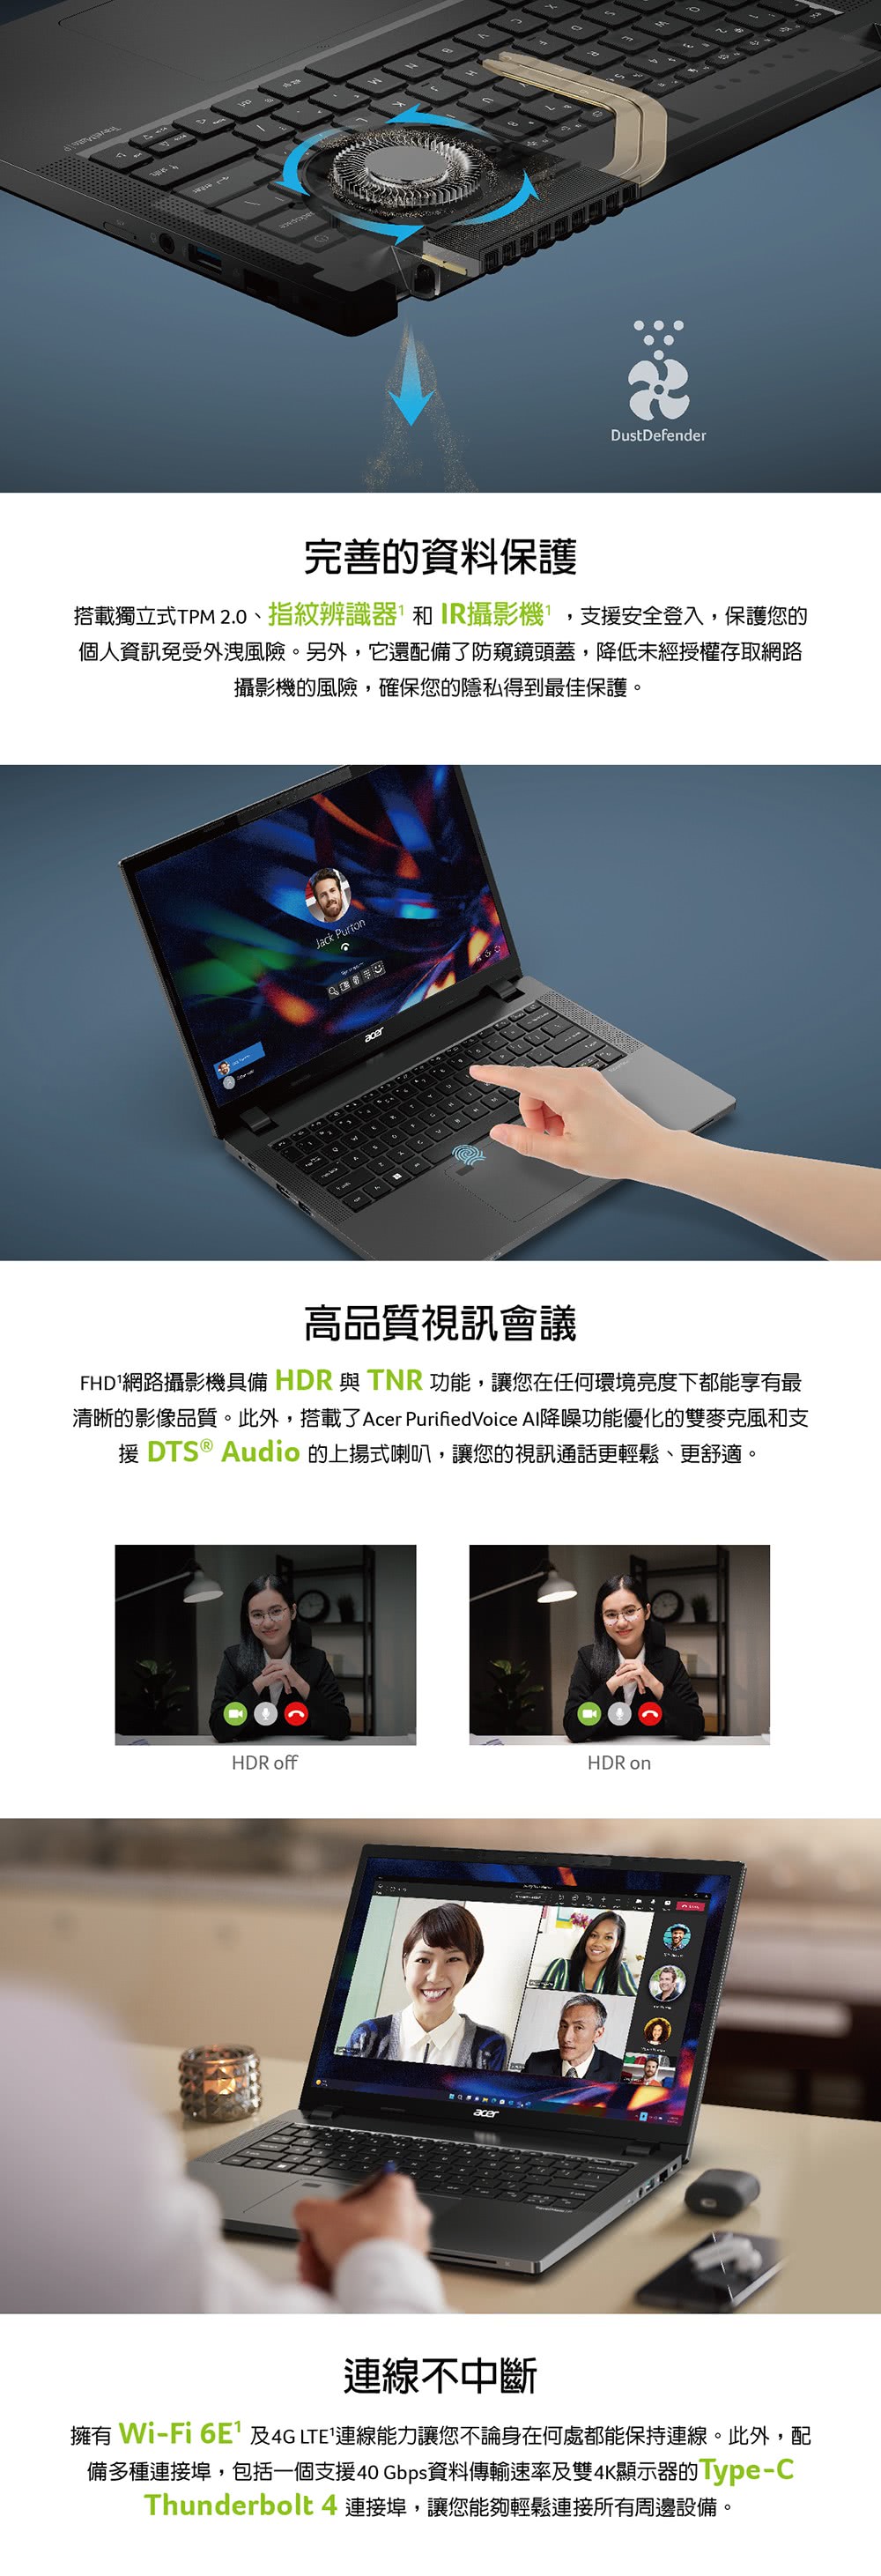 Acer 宏碁 14吋i5商用筆電(TravelMate T